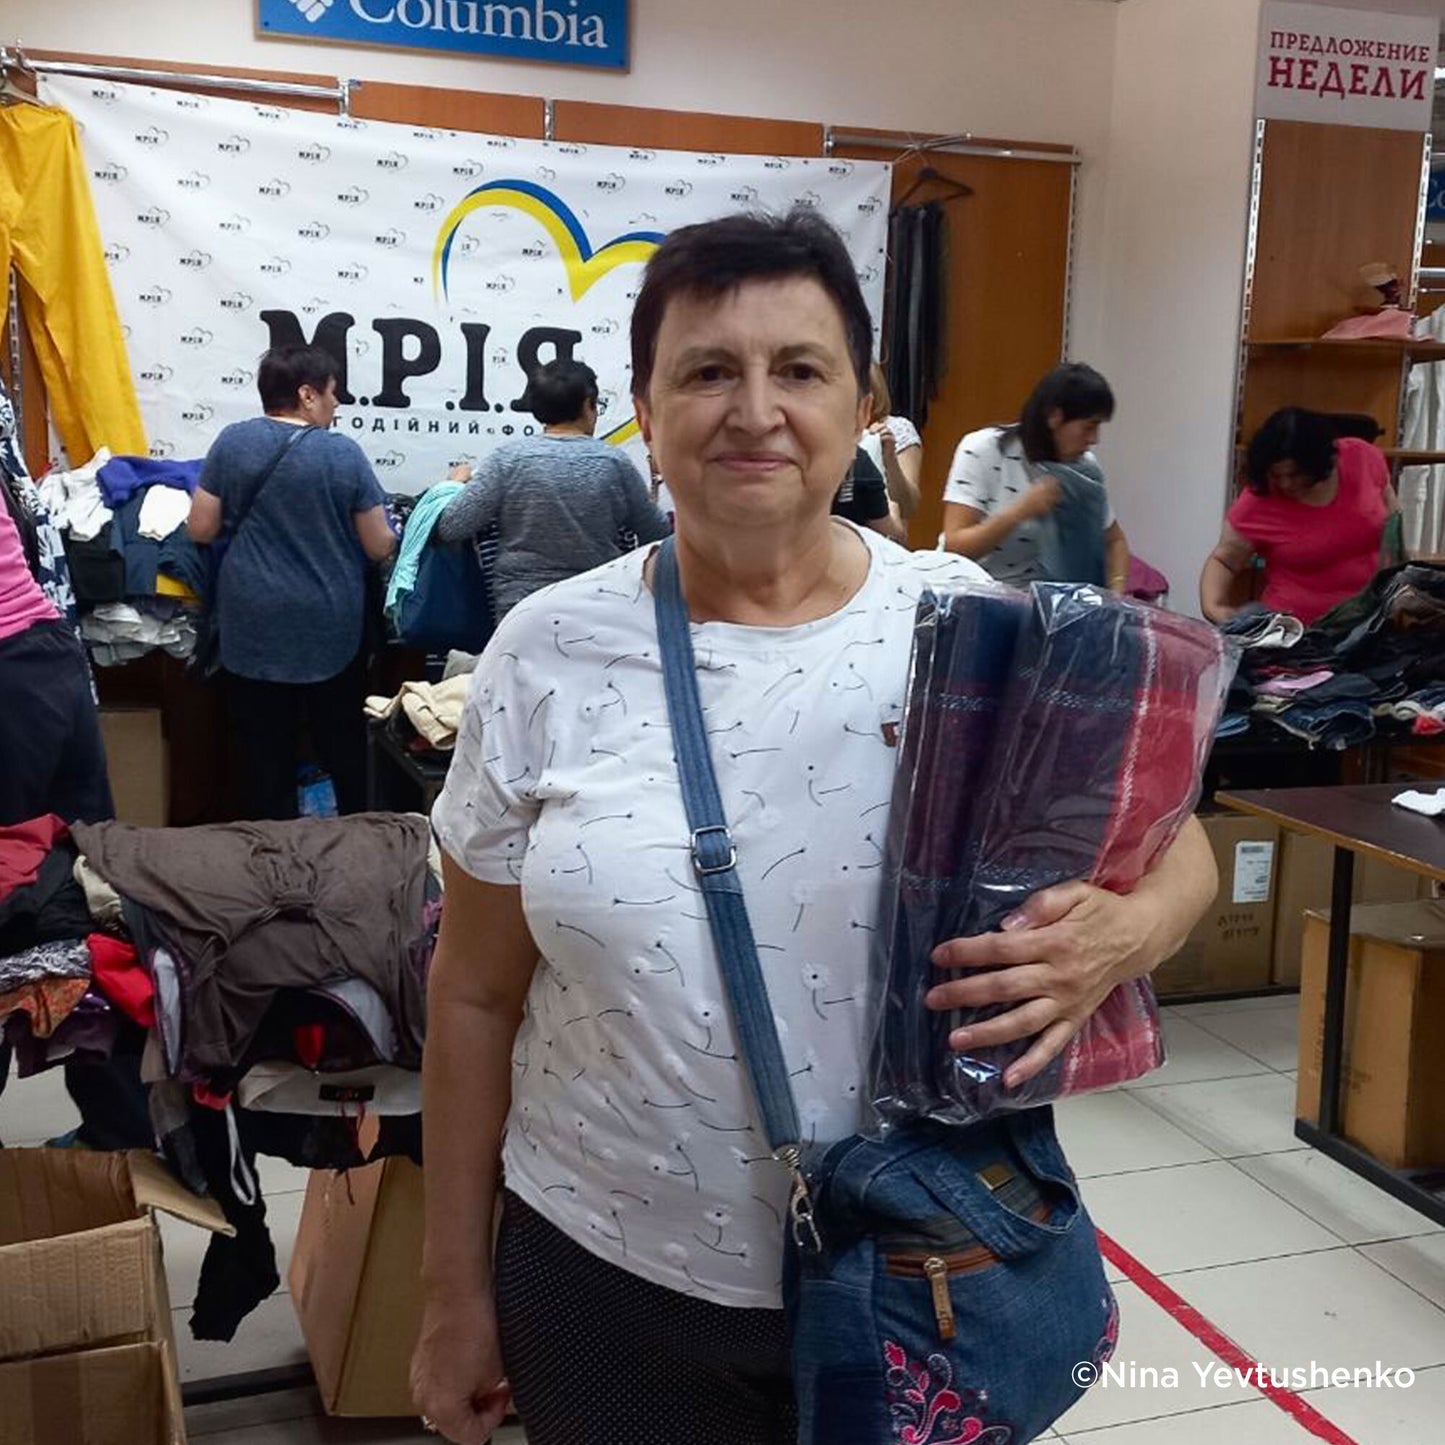 Send Blankets to People & Pets of Ukraine